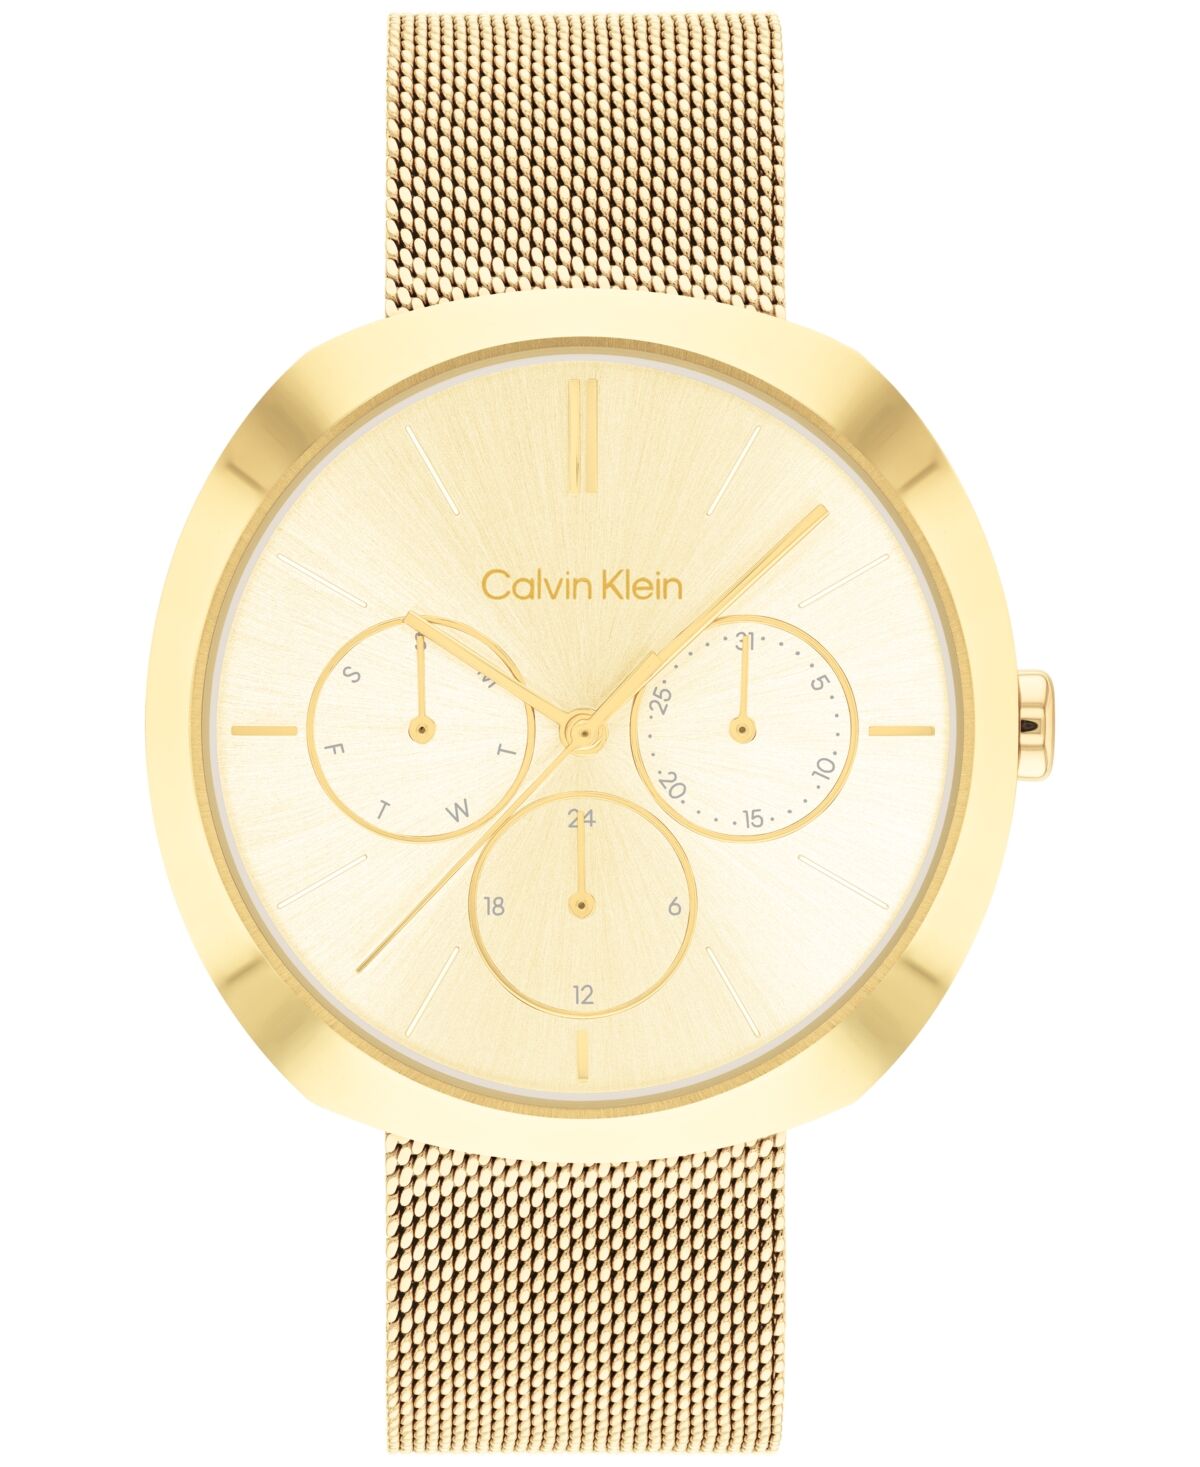 Calvin Klein Women's Multifunction Gold-Tone Stainless Steel Mesh Bracelet Watch 38mm - Gold